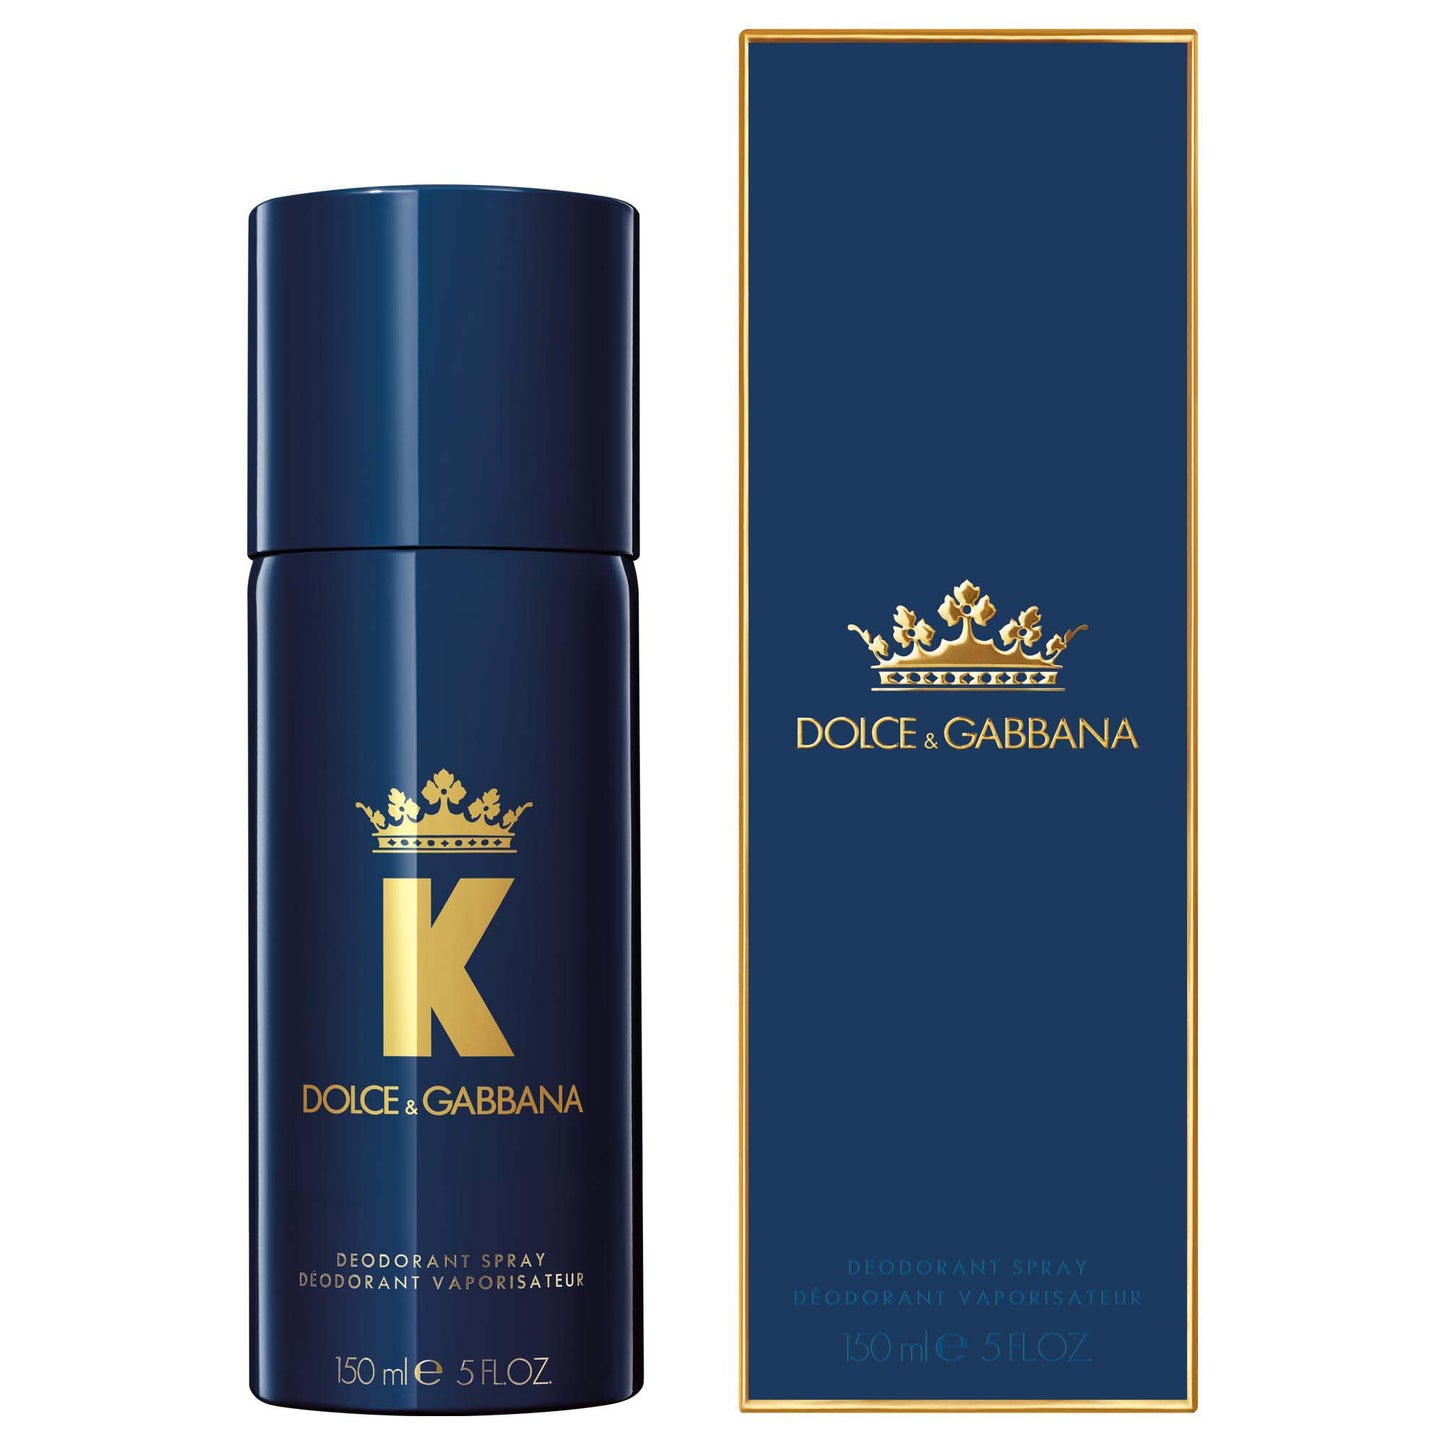 Dolce & Gabbana K by Dolce & Gabbana Deodorante 150 ml